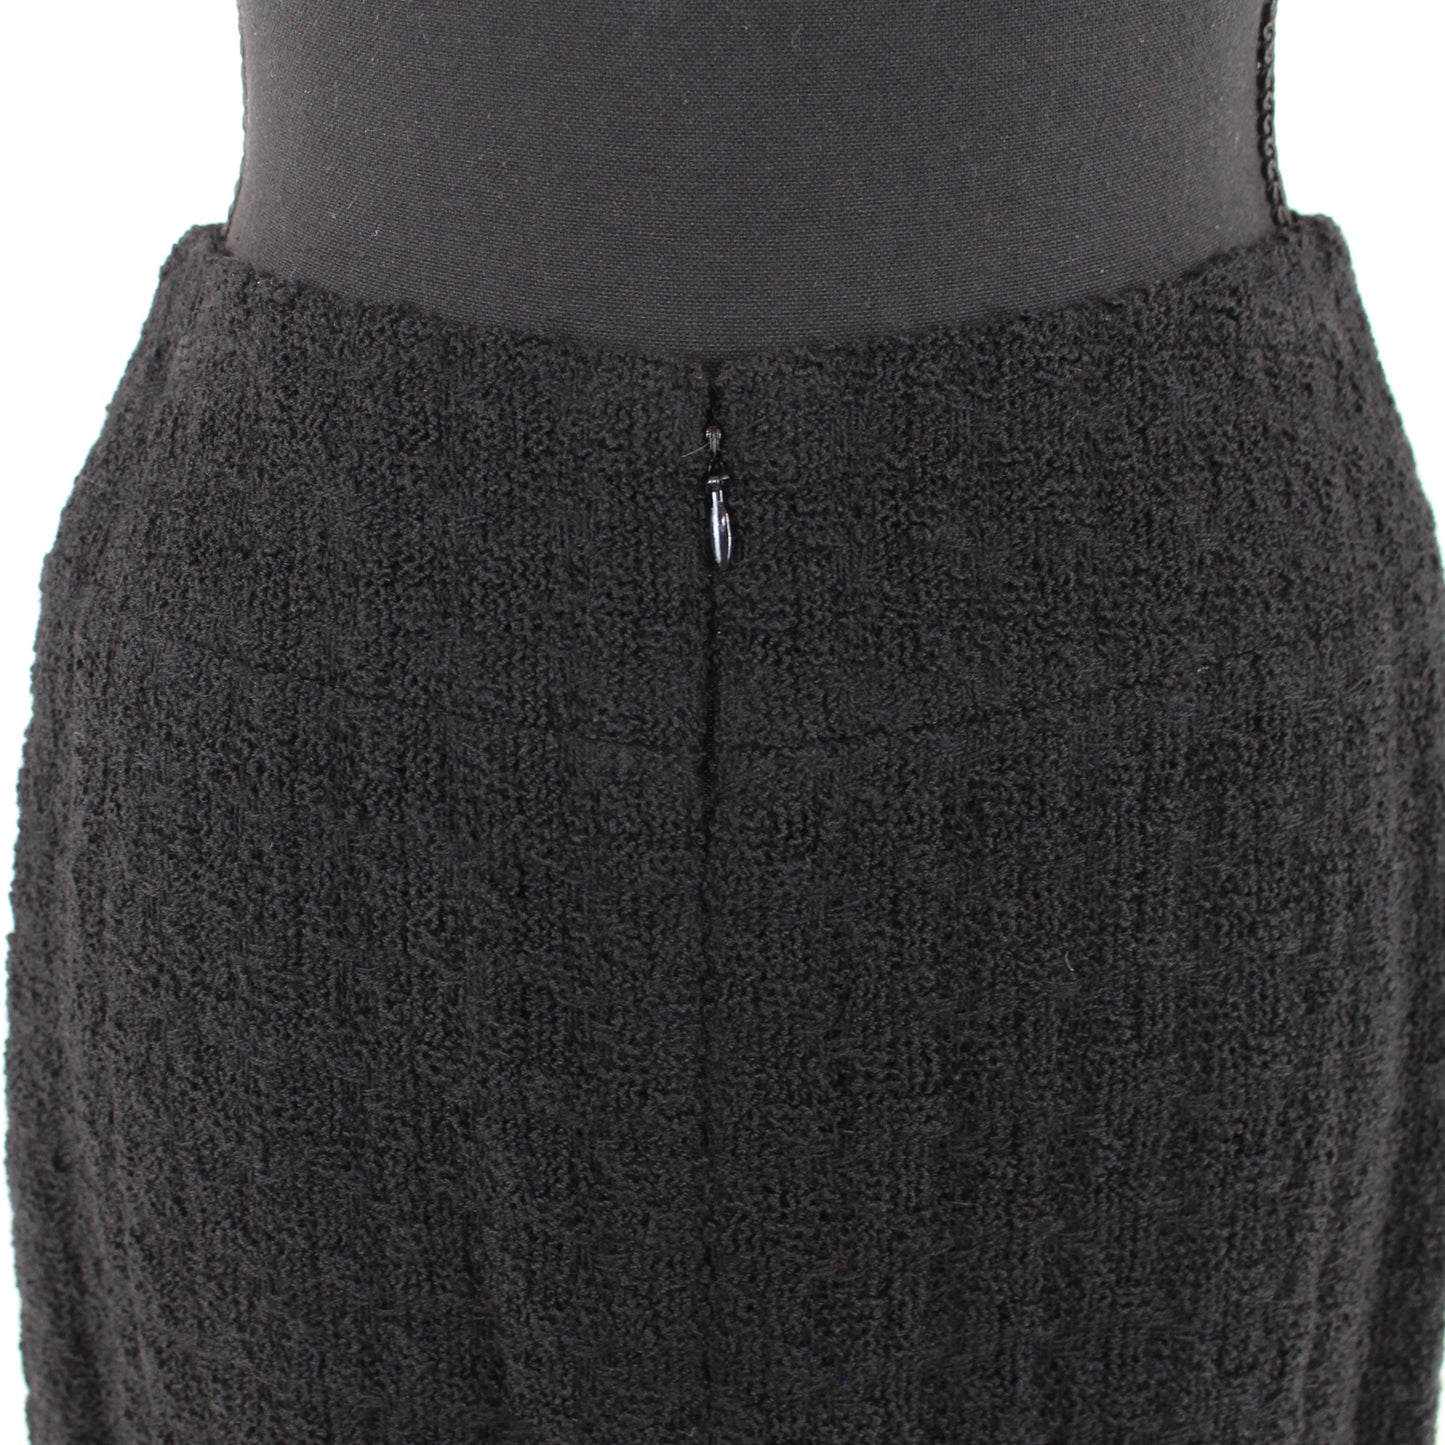 Chanel Boucle Tweed Pencil Skirt